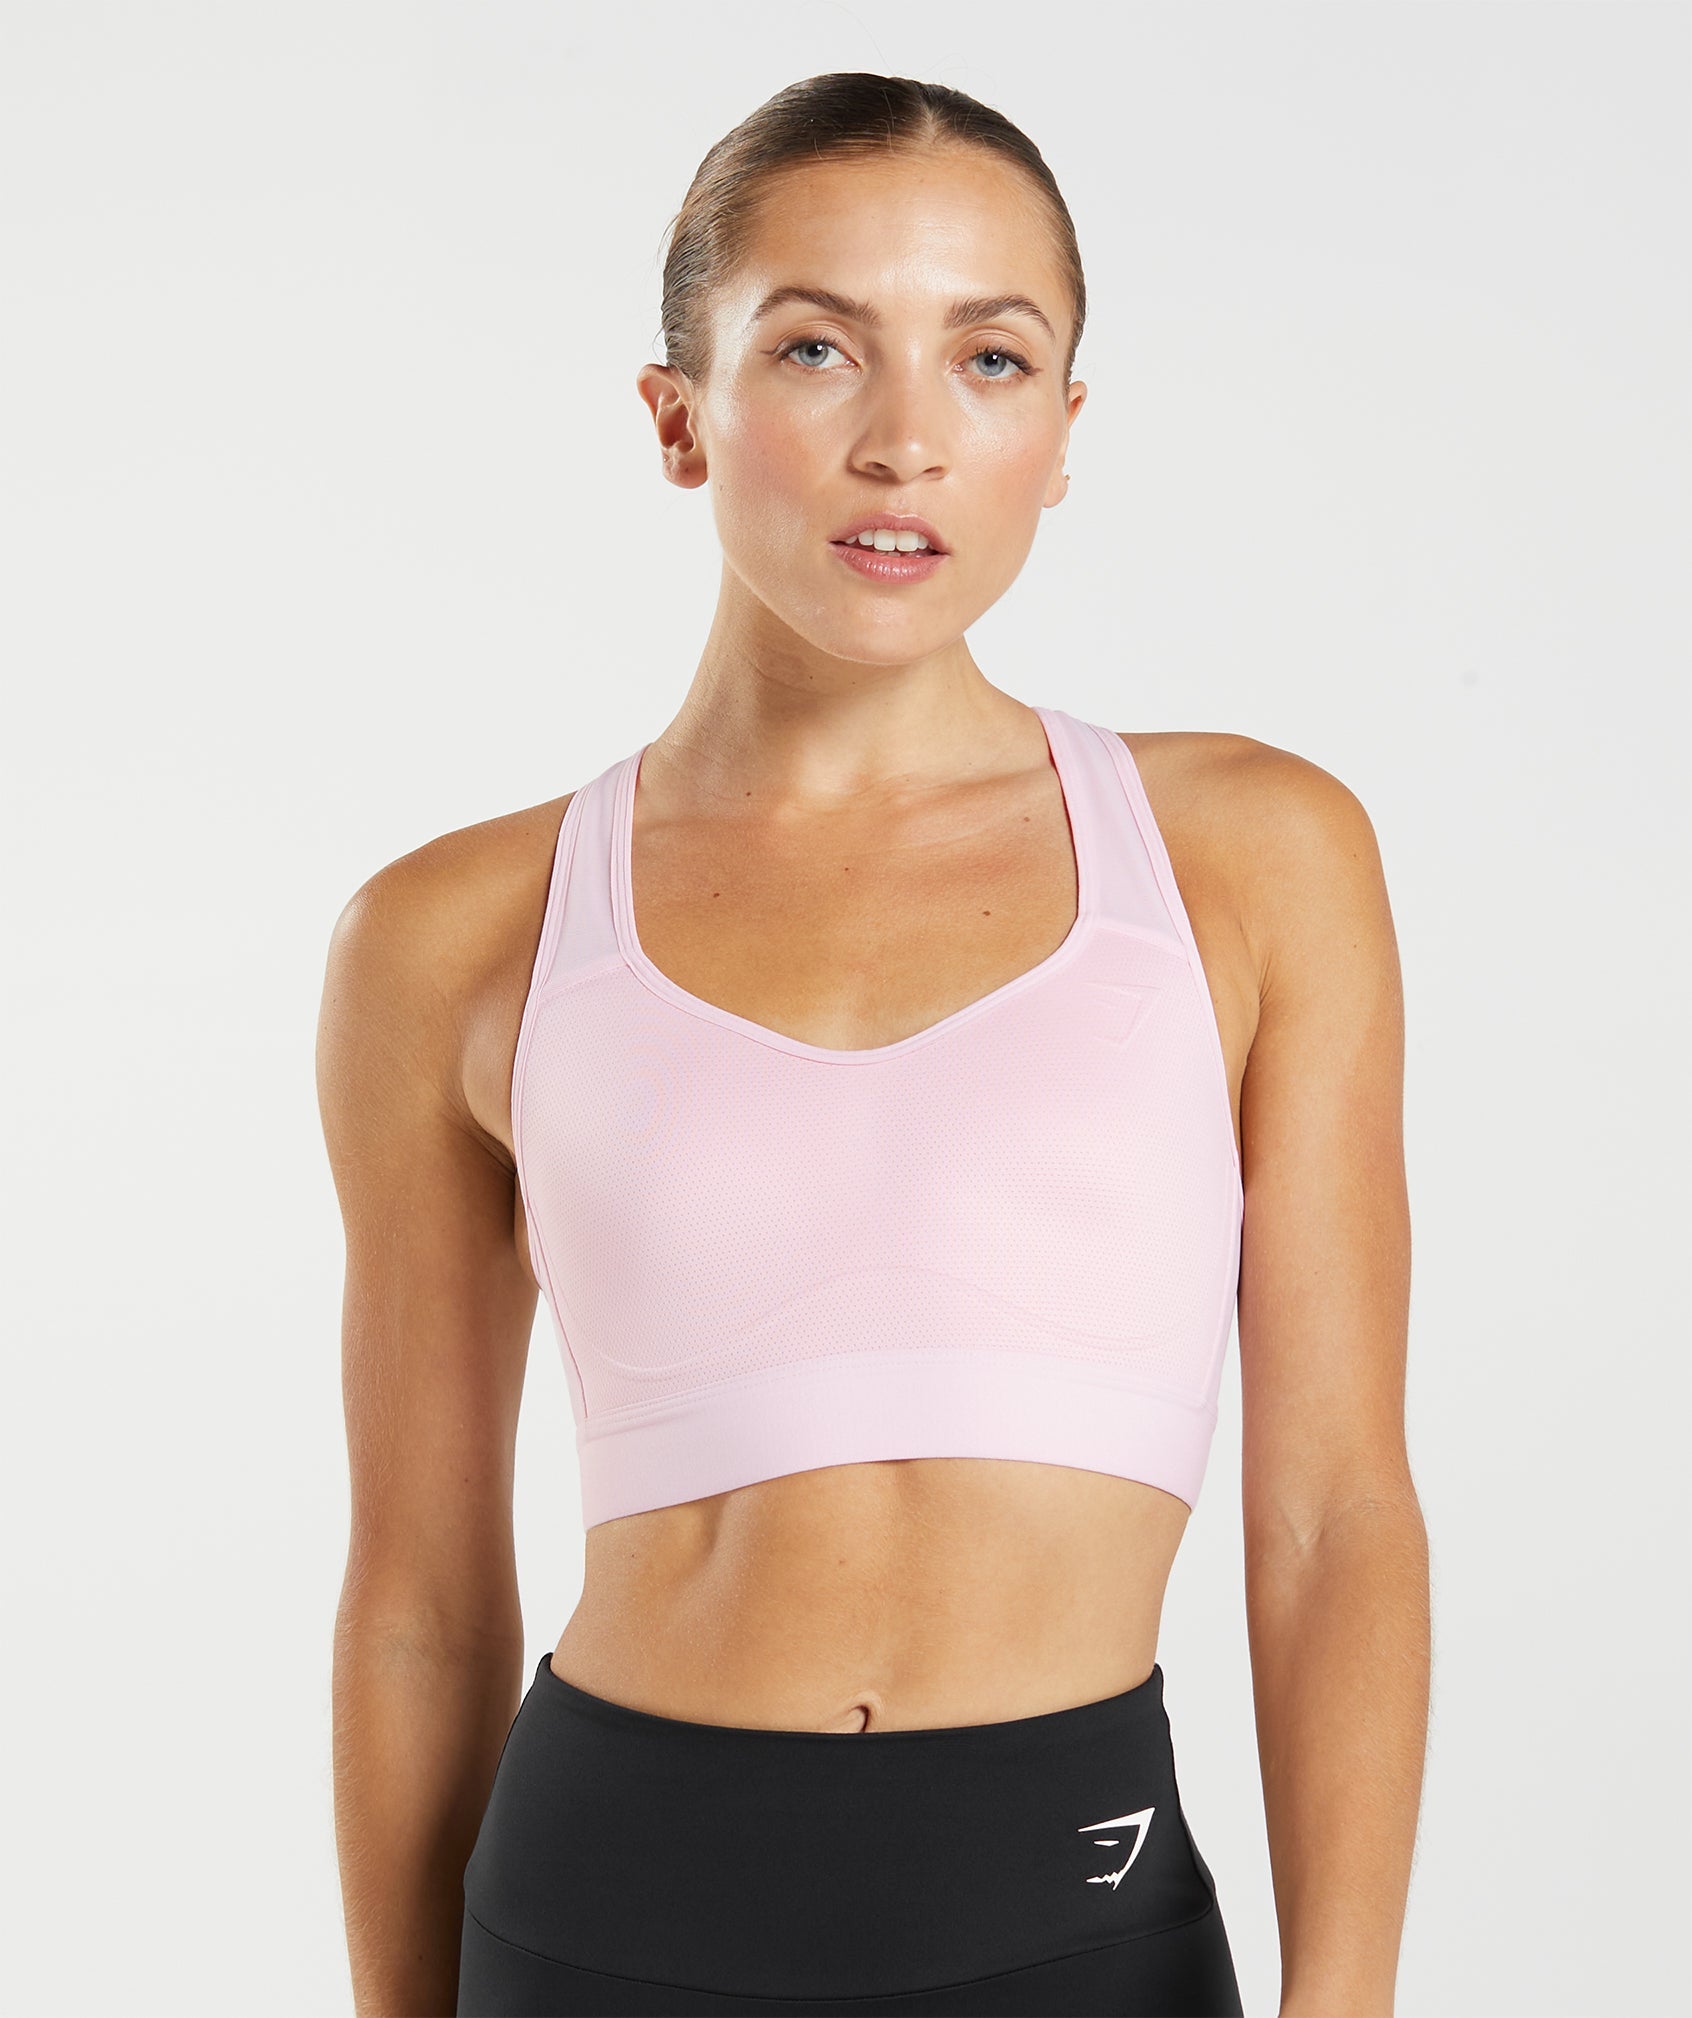 Women's Sports Bra - Breathable Nylon Gymshark Bandeau Top For